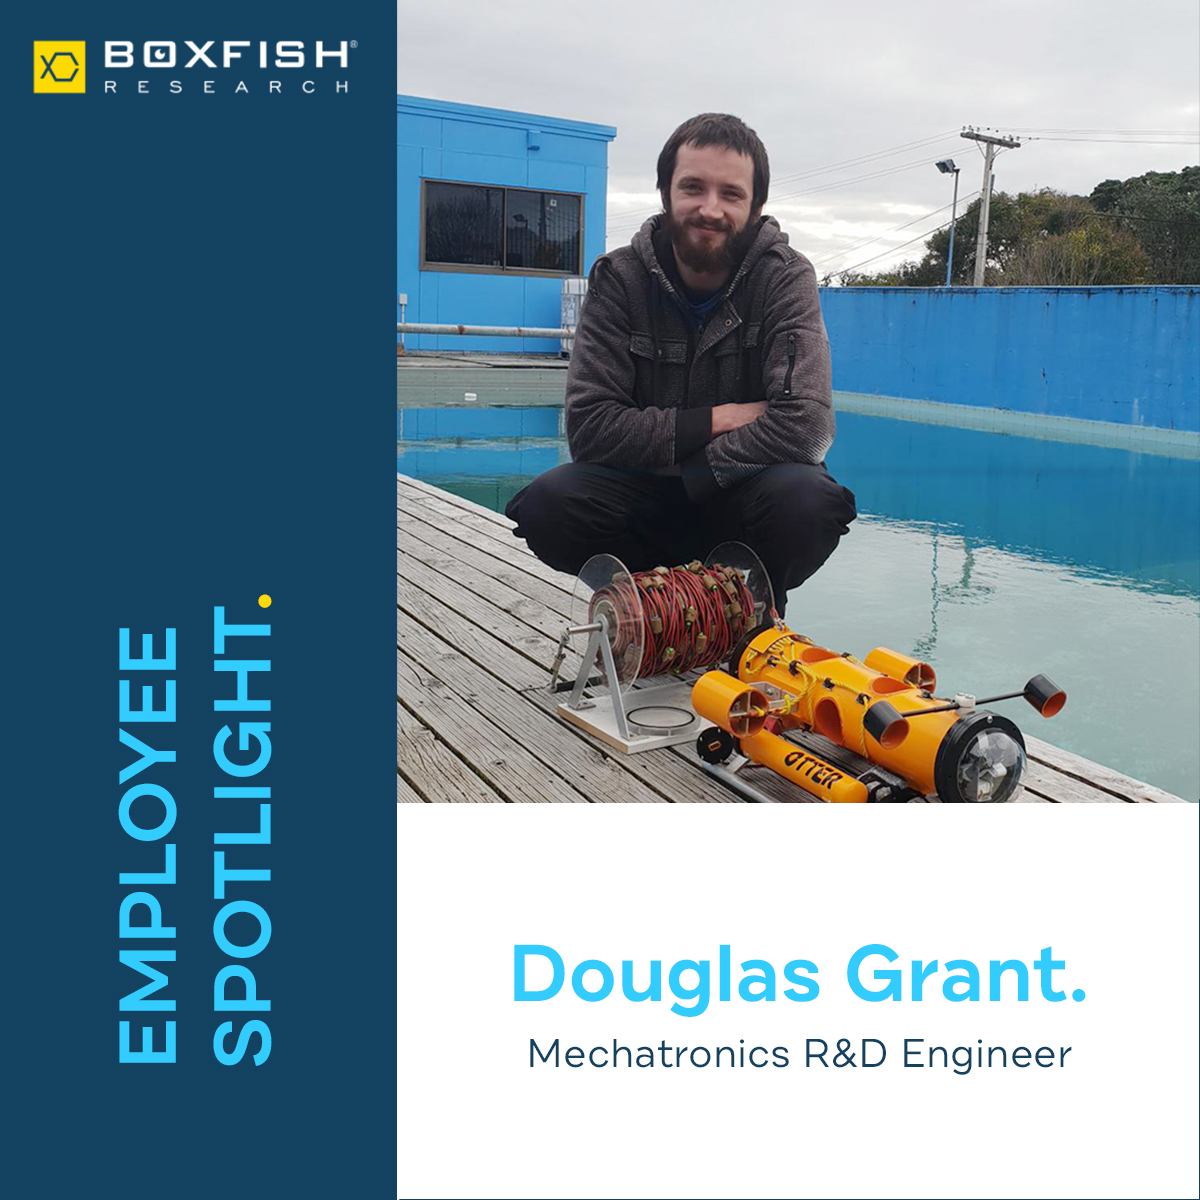 Employee Spotlight: Douglas Grant, Mechatronics R&D Engineer